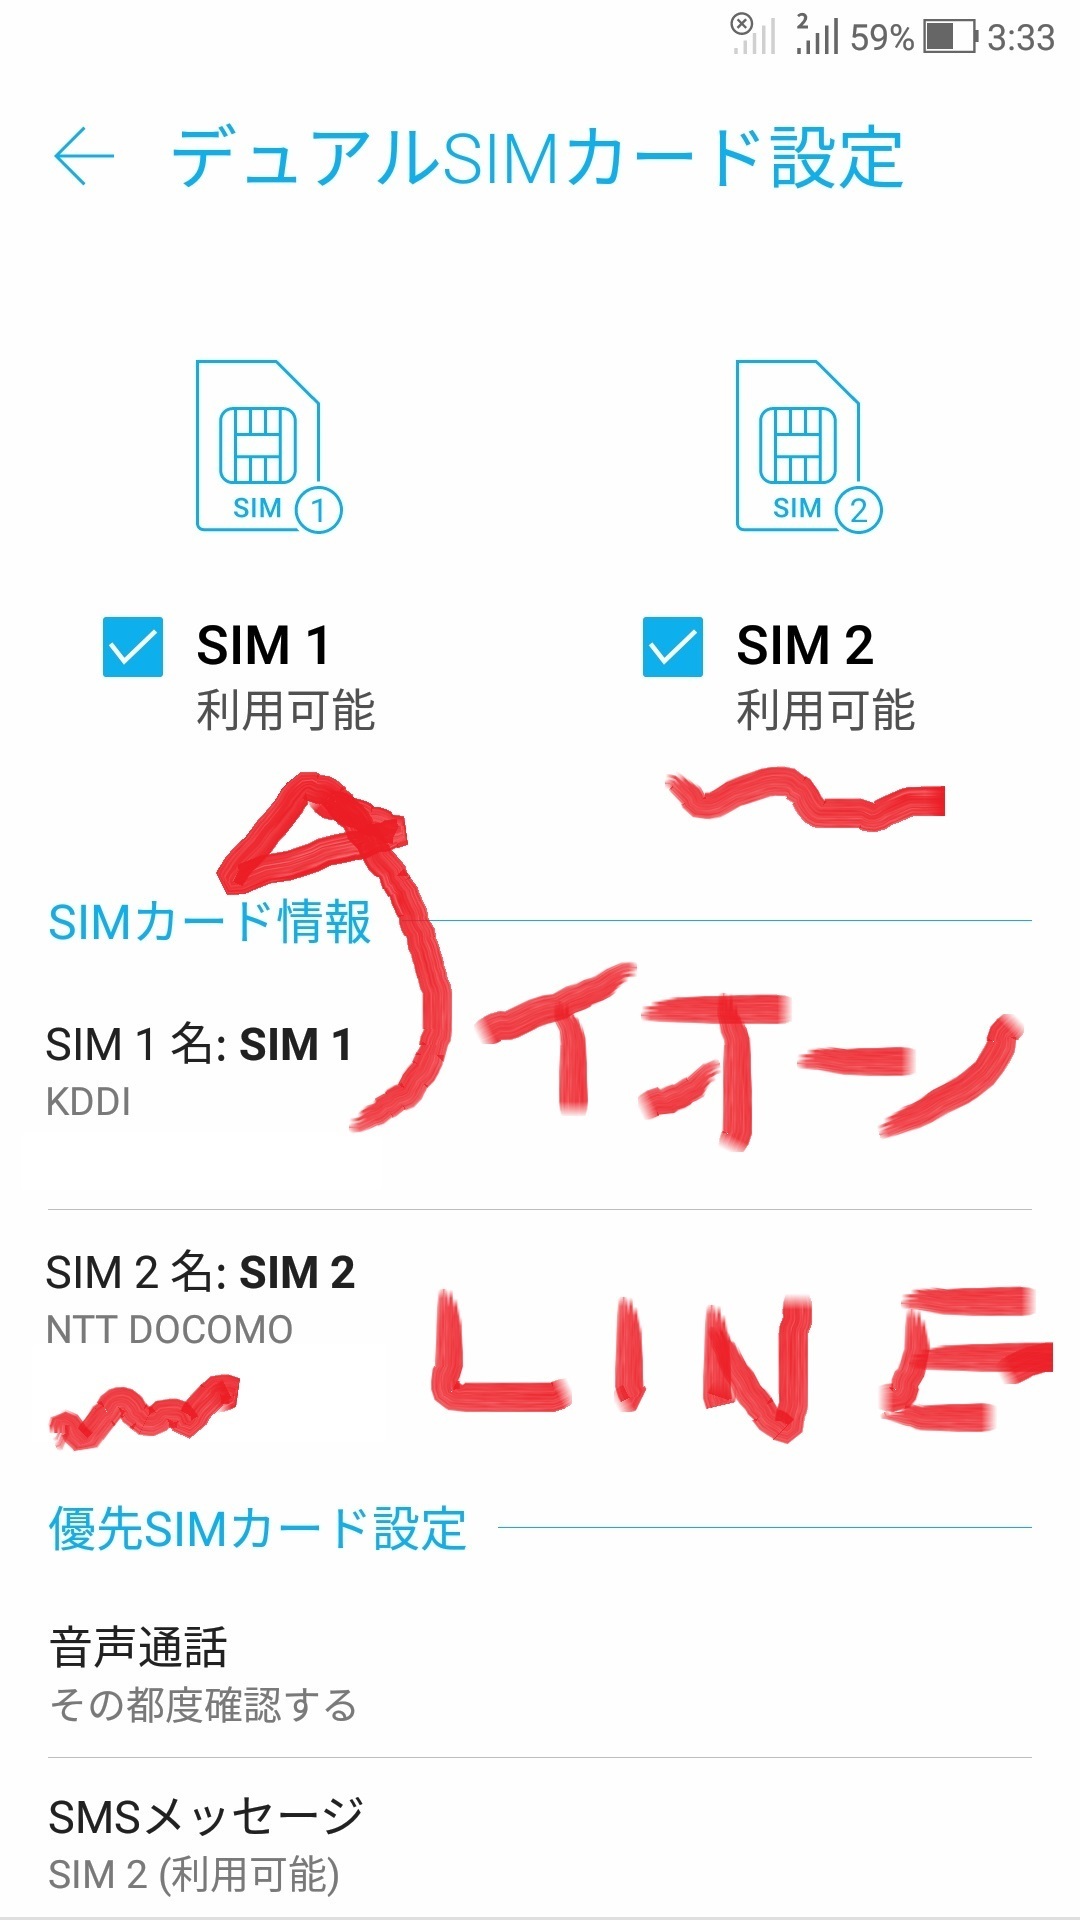 SIM_dual_card_2_line_aeon_mobile_2.jpg